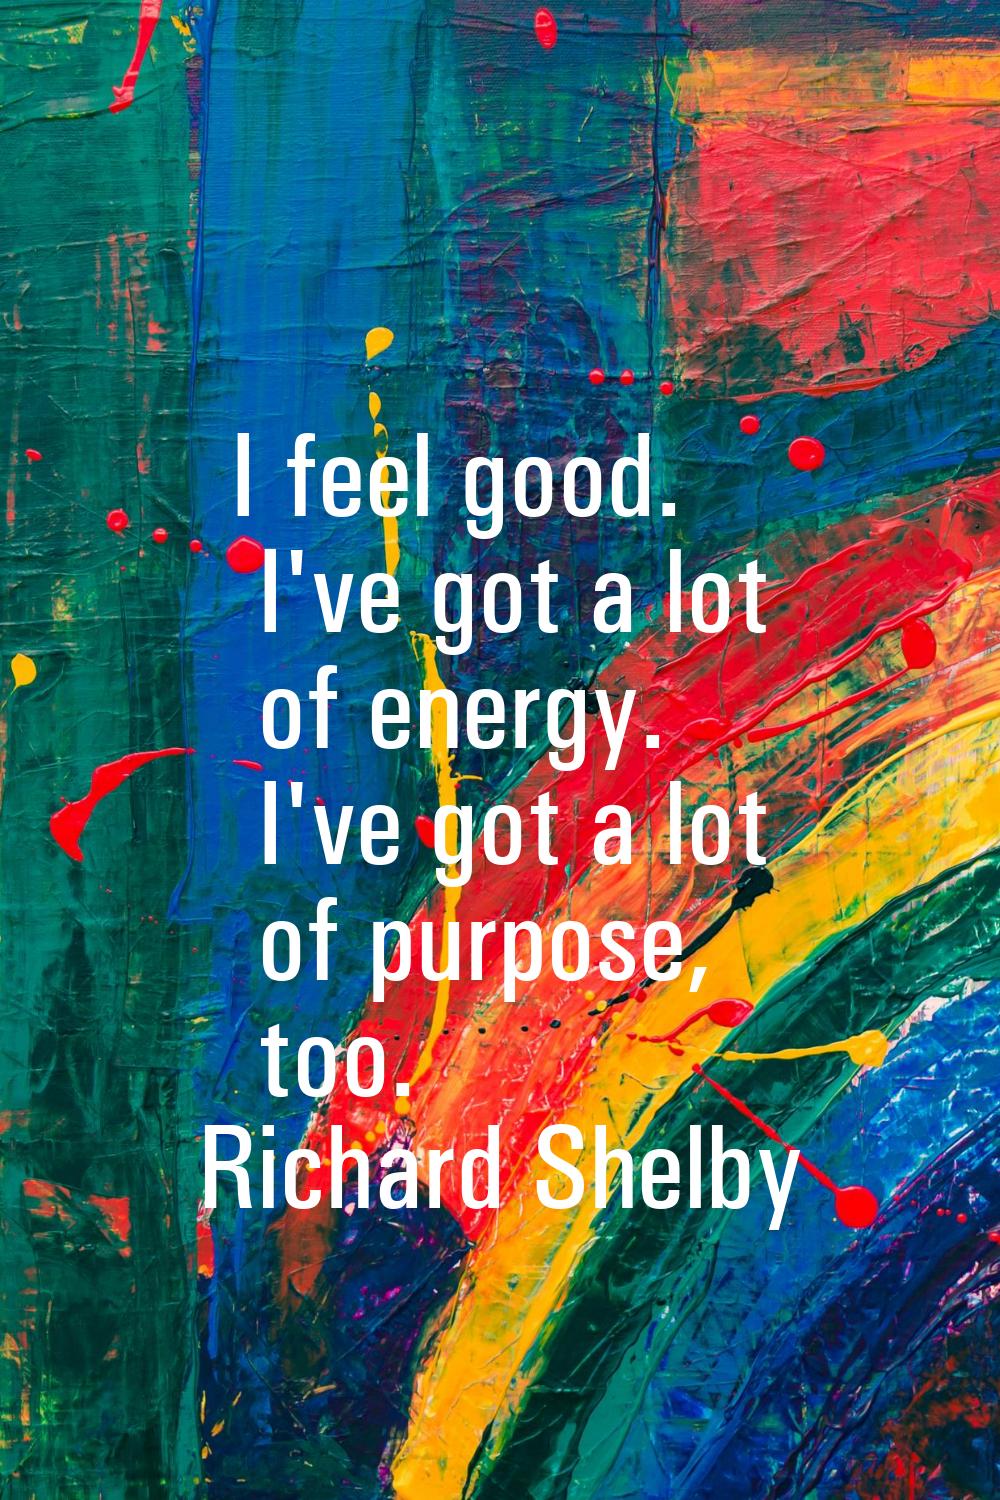 I feel good. I've got a lot of energy. I've got a lot of purpose, too.